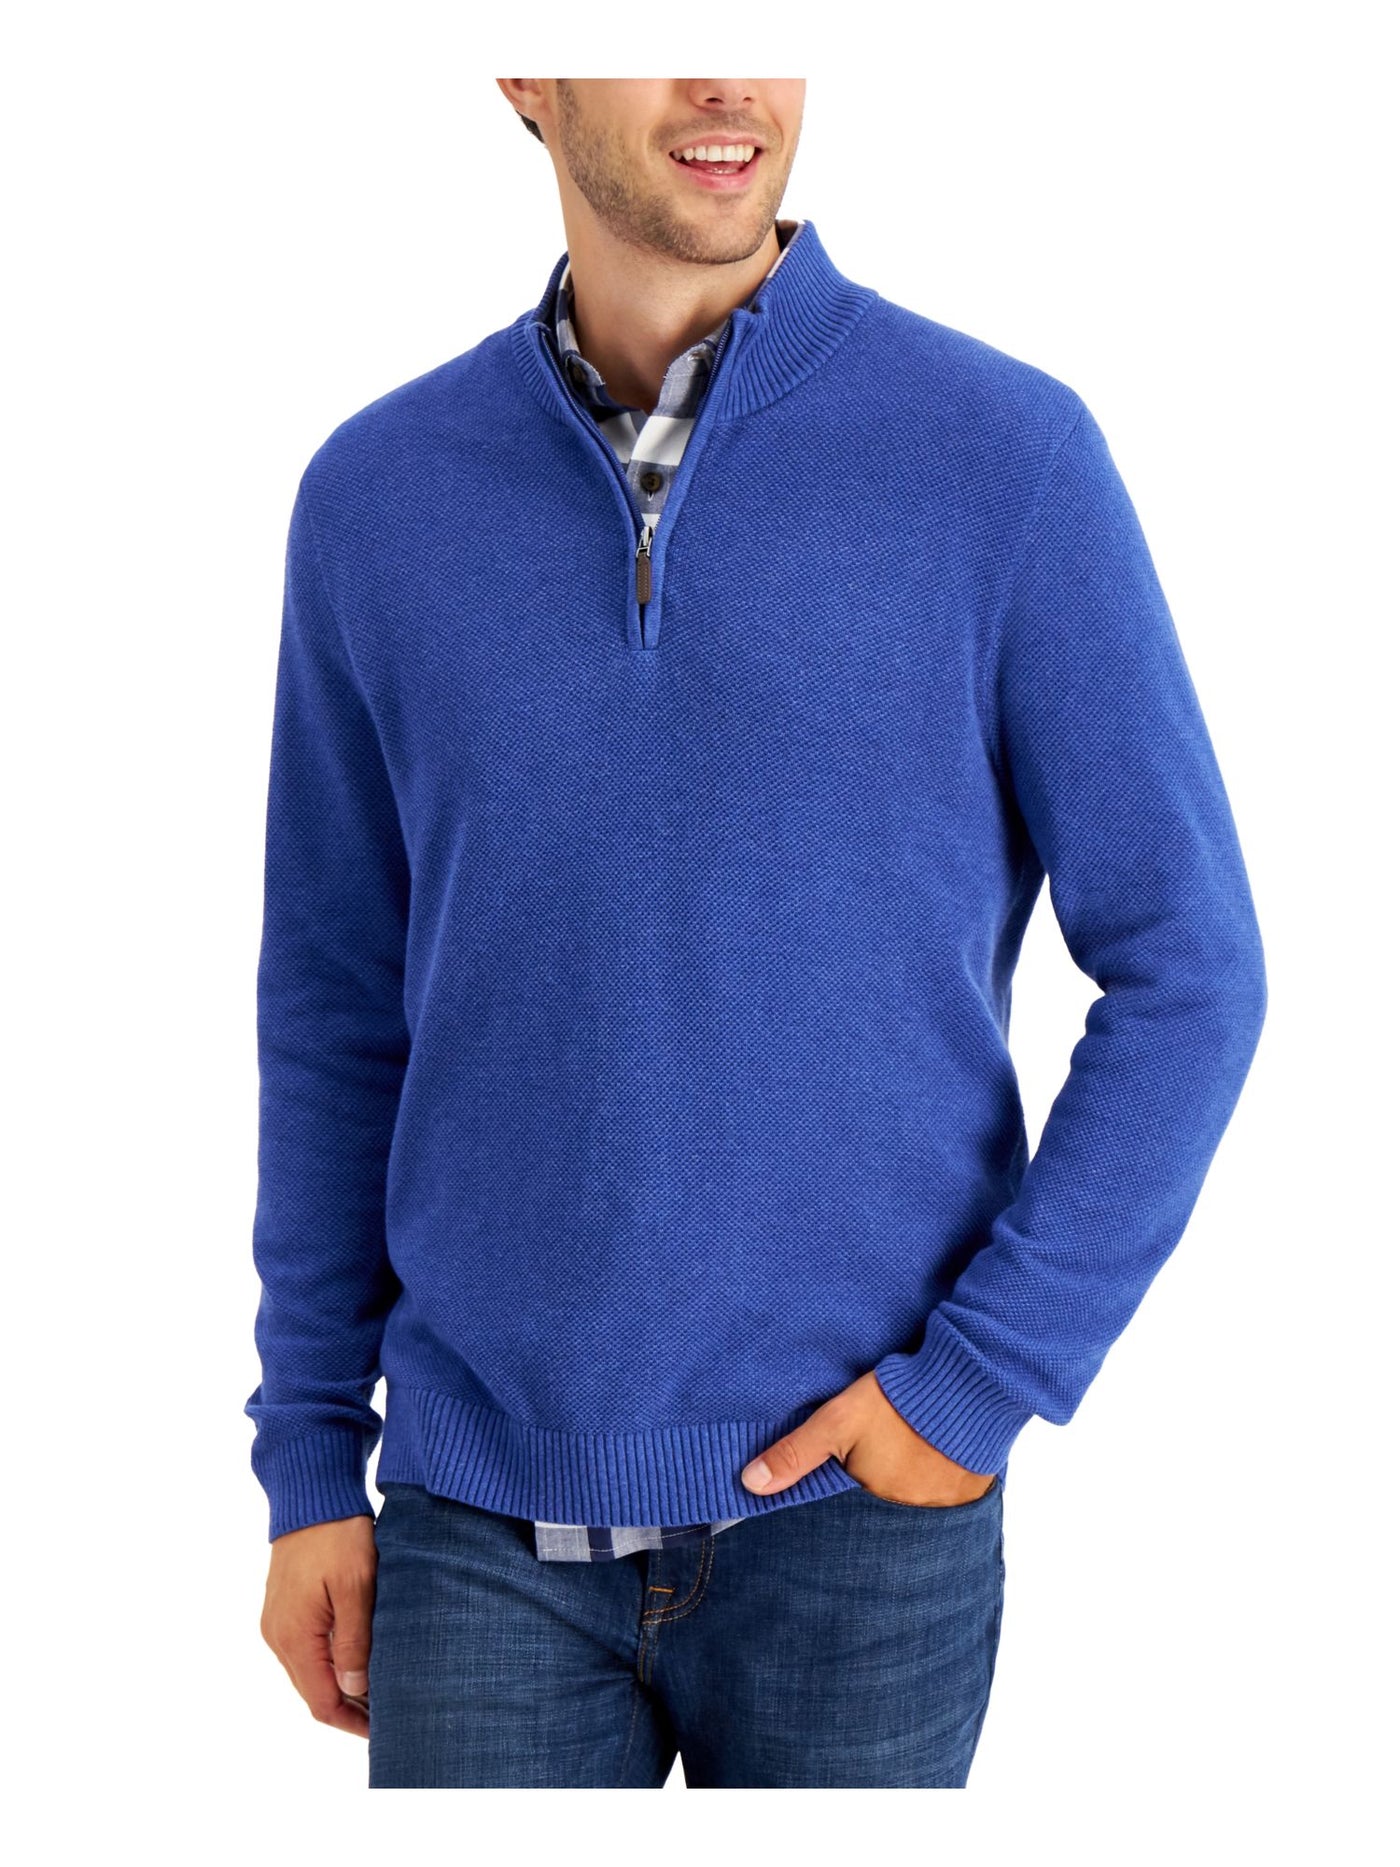 CLUBROOM Mens Blue Mock Neck Classic Fit Quarter-Zip Pullover Sweater S